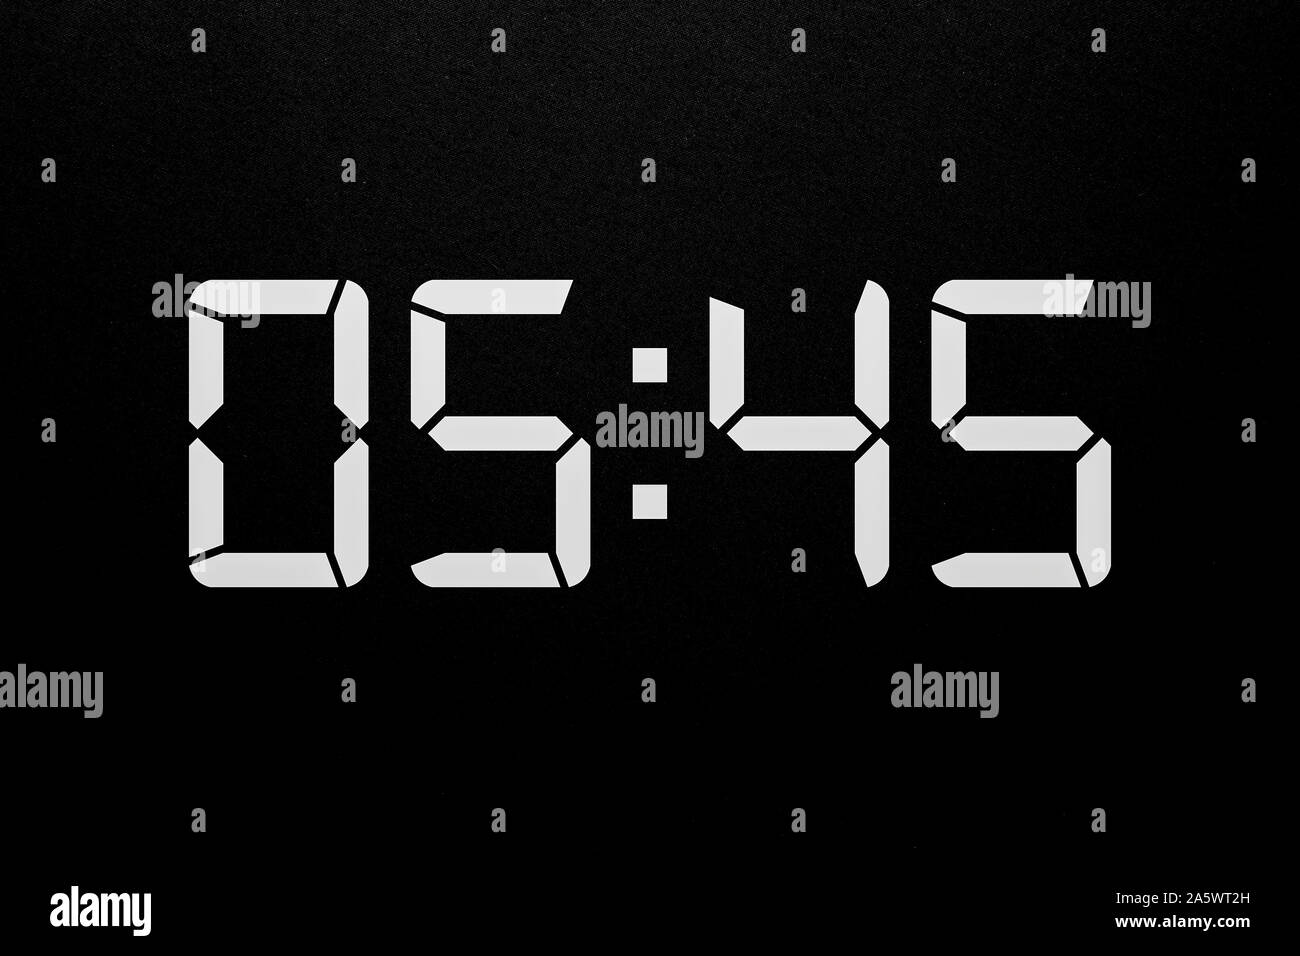 Showing time 05:45 on white led digital clock isolated black background Stock Photo